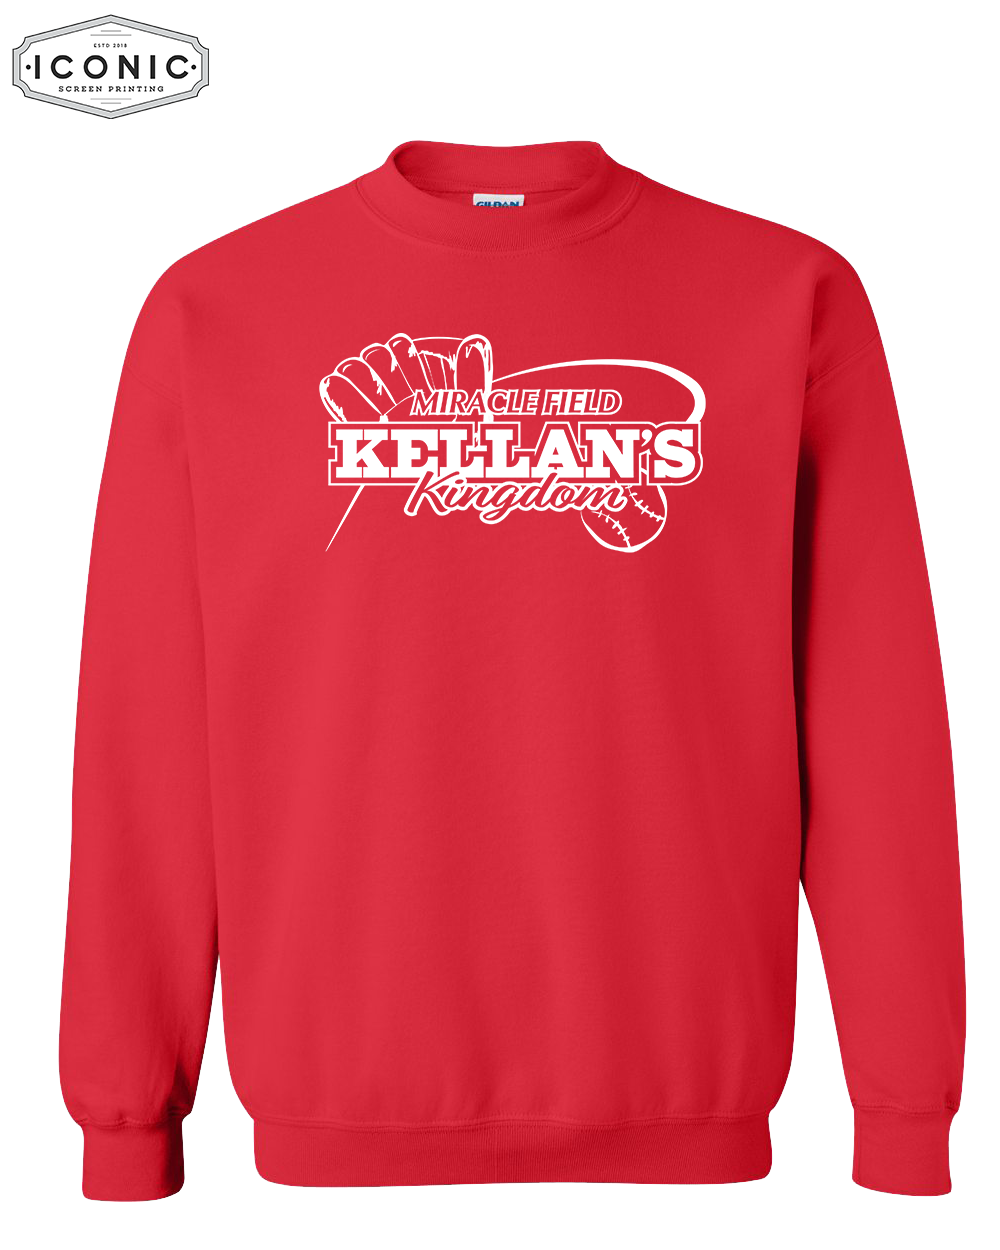 Kellan's Kingdom - Heavy Blend Sweatshirt